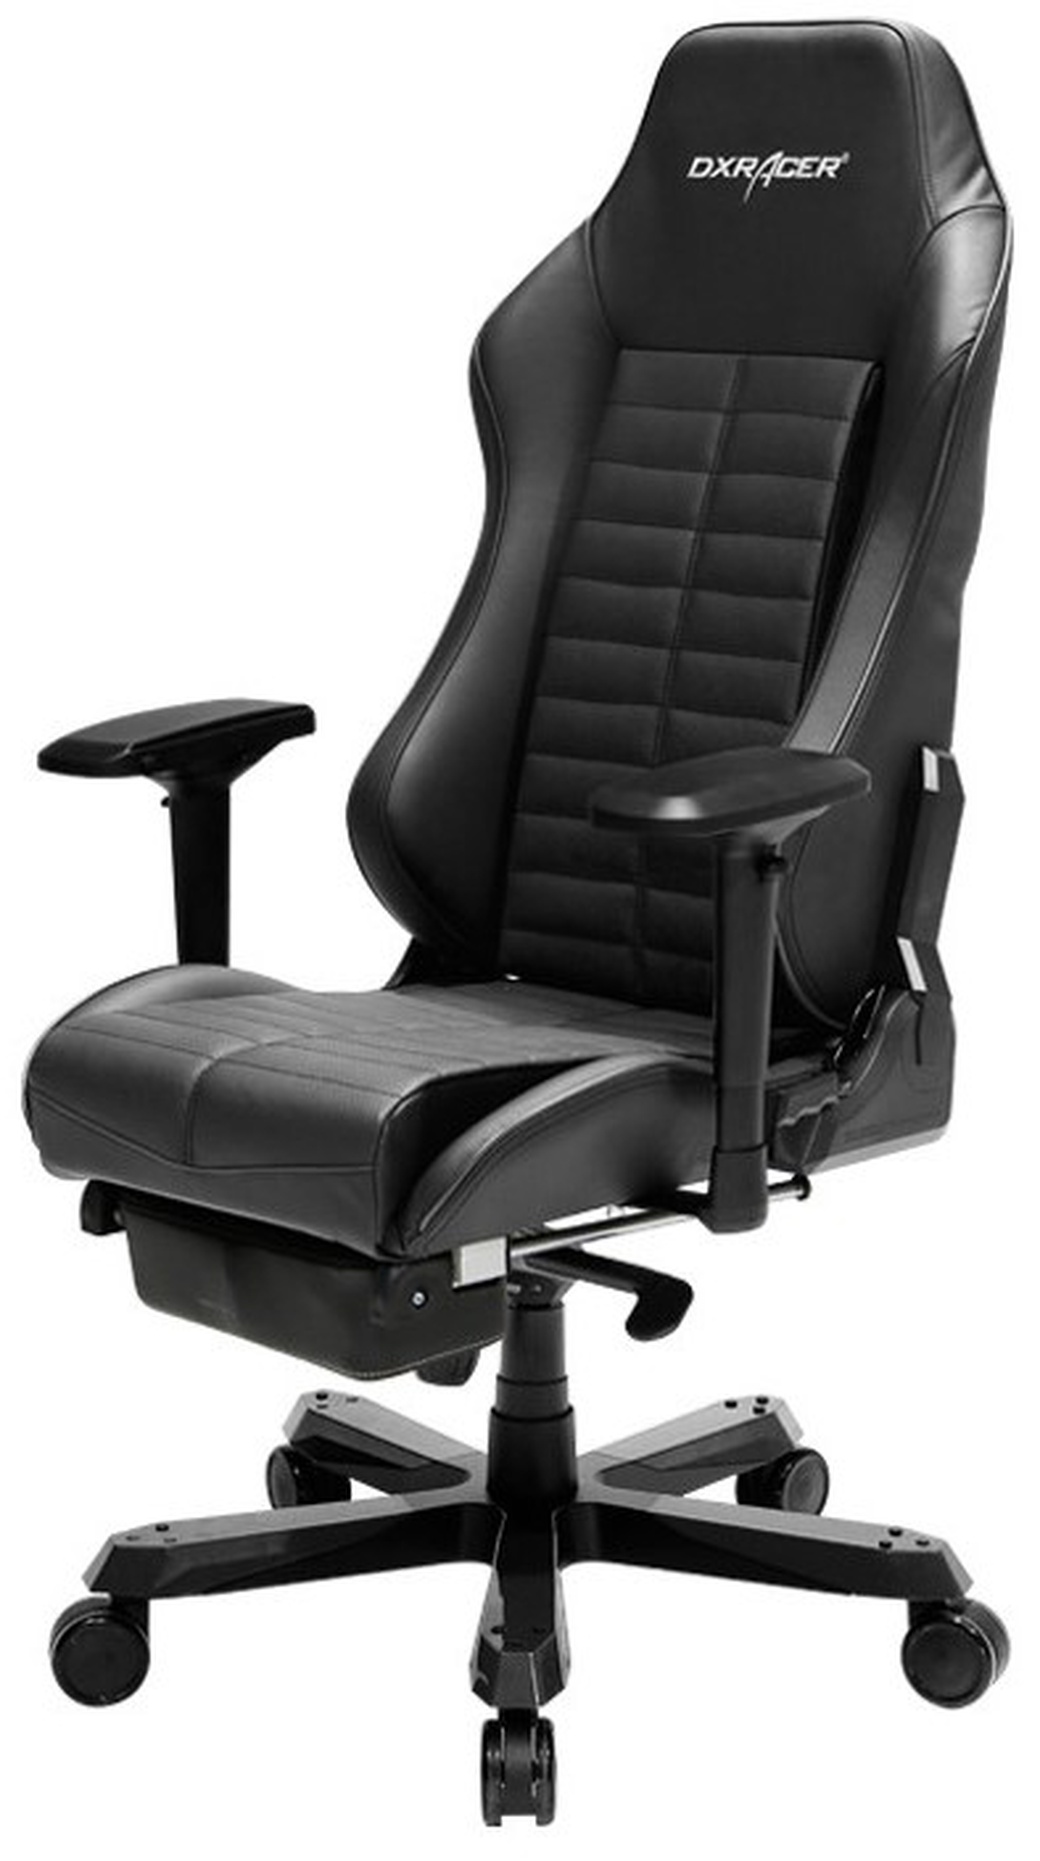 DXRacer Iron Игровое кресло чёрное, OH/IS133/N/FT(OH/IA133/N), экокожа фото